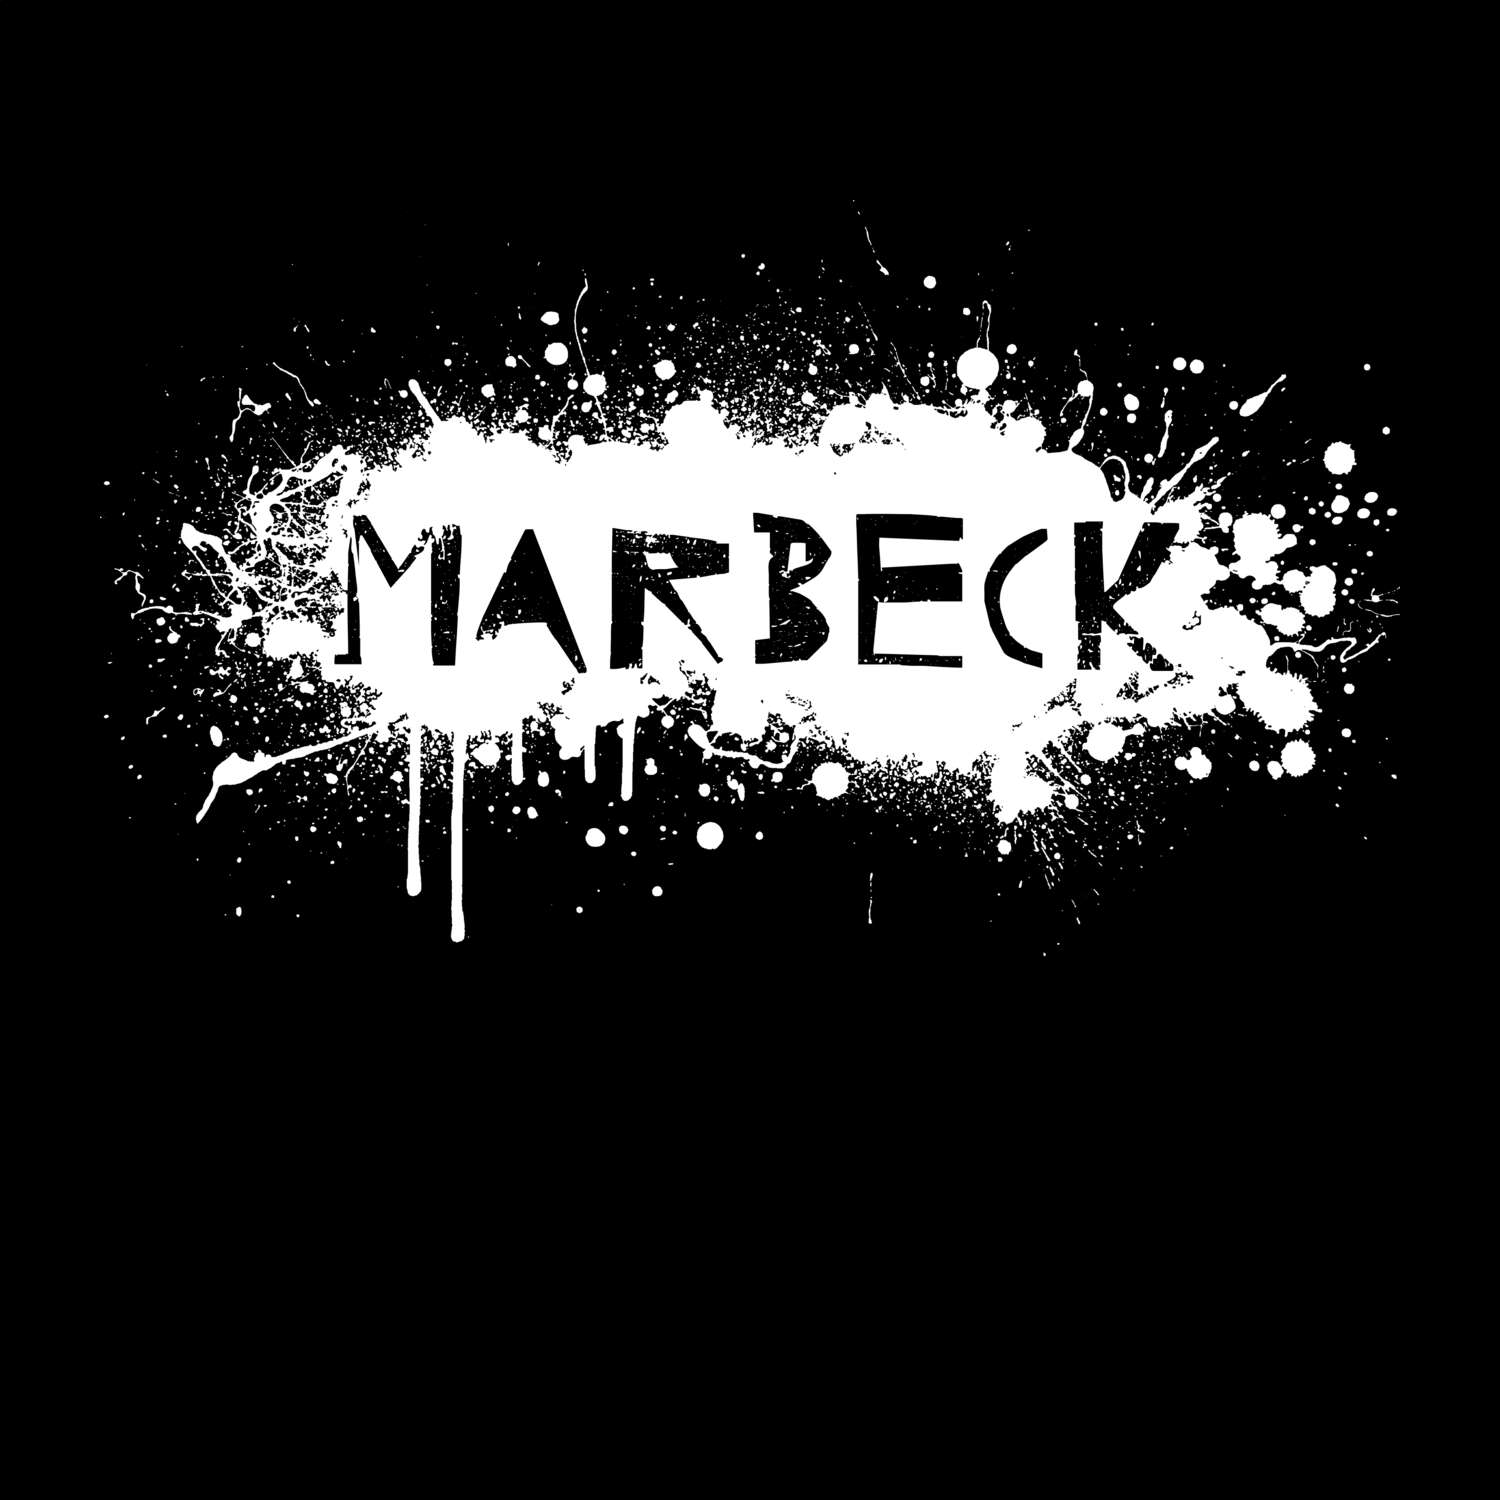 Marbeck T-Shirt »Paint Splash Punk«